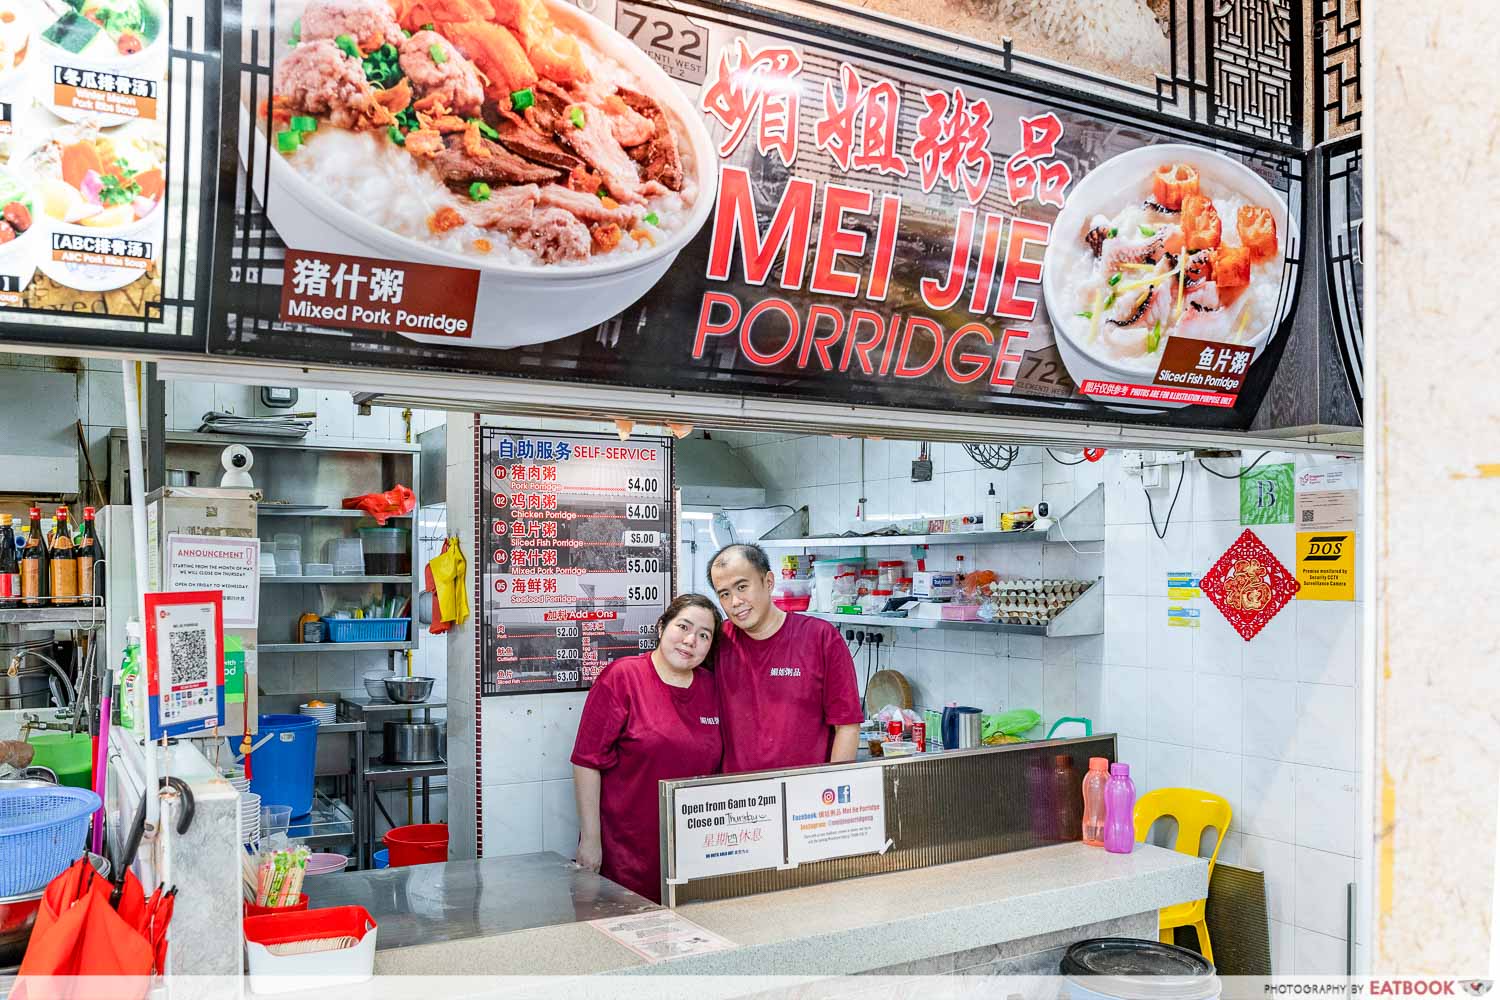 Mei Jie Porridge - stallfront, yun and ivan